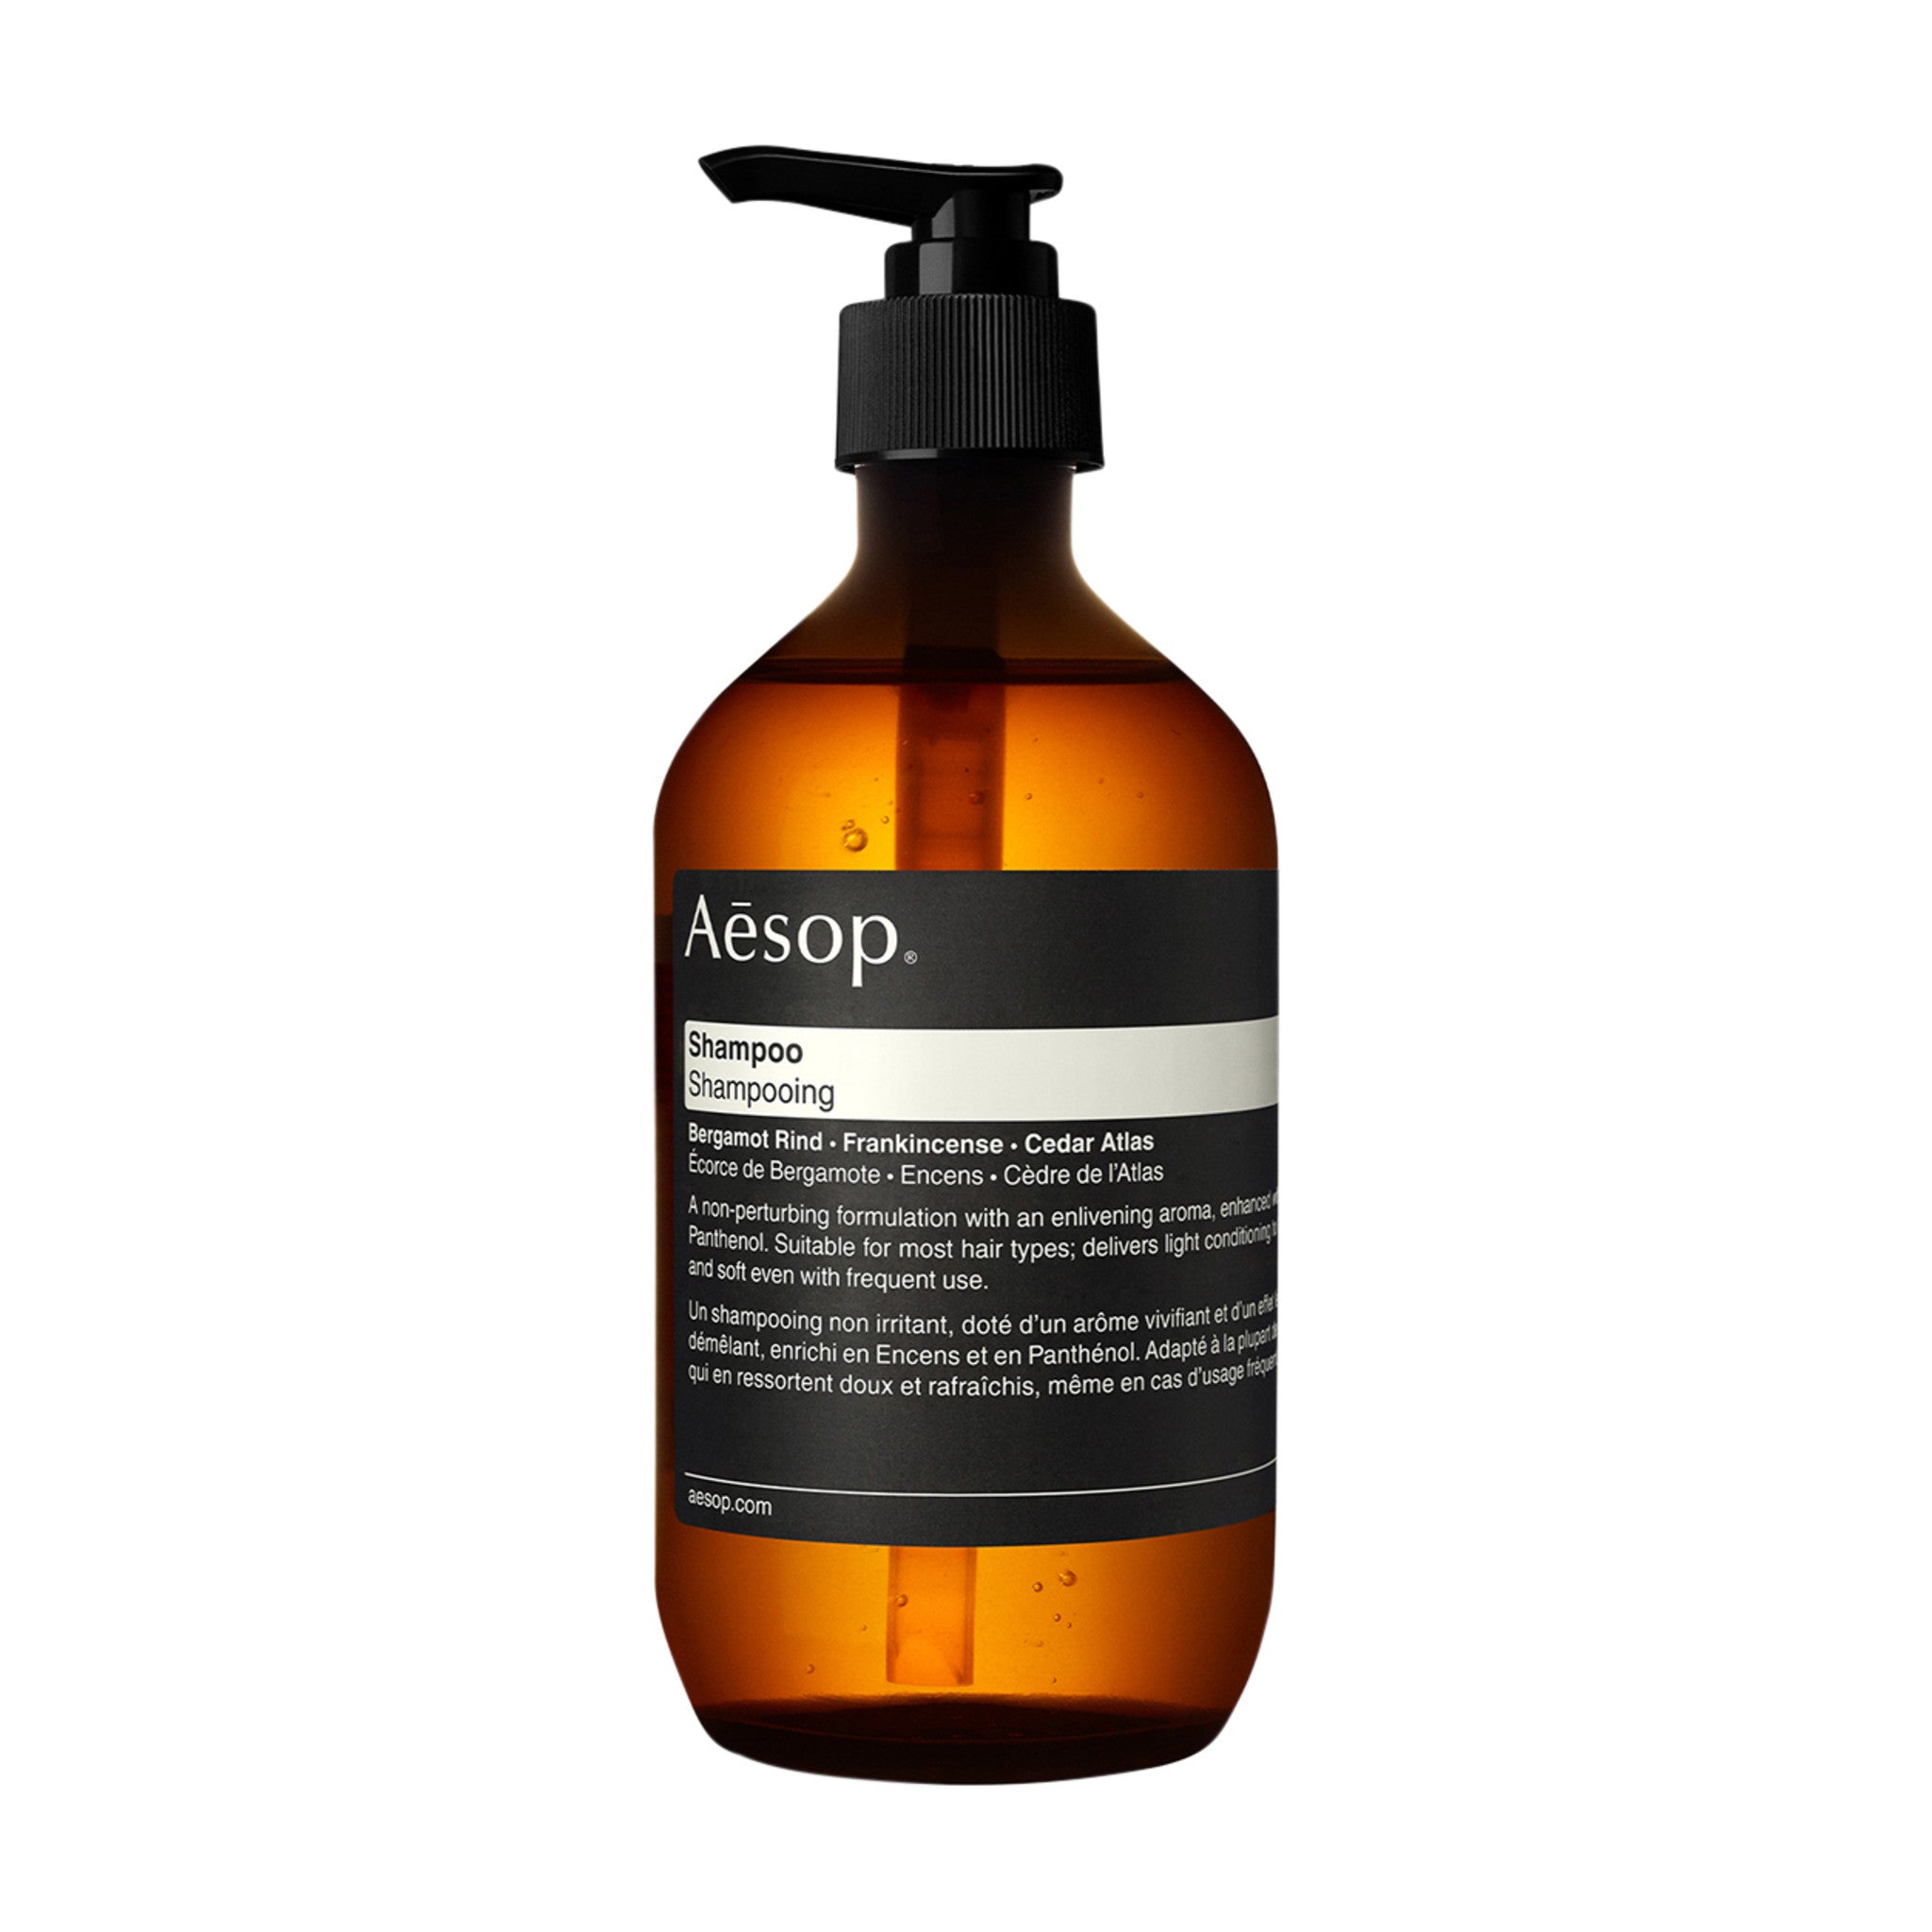 Aesop Shampoo main image.